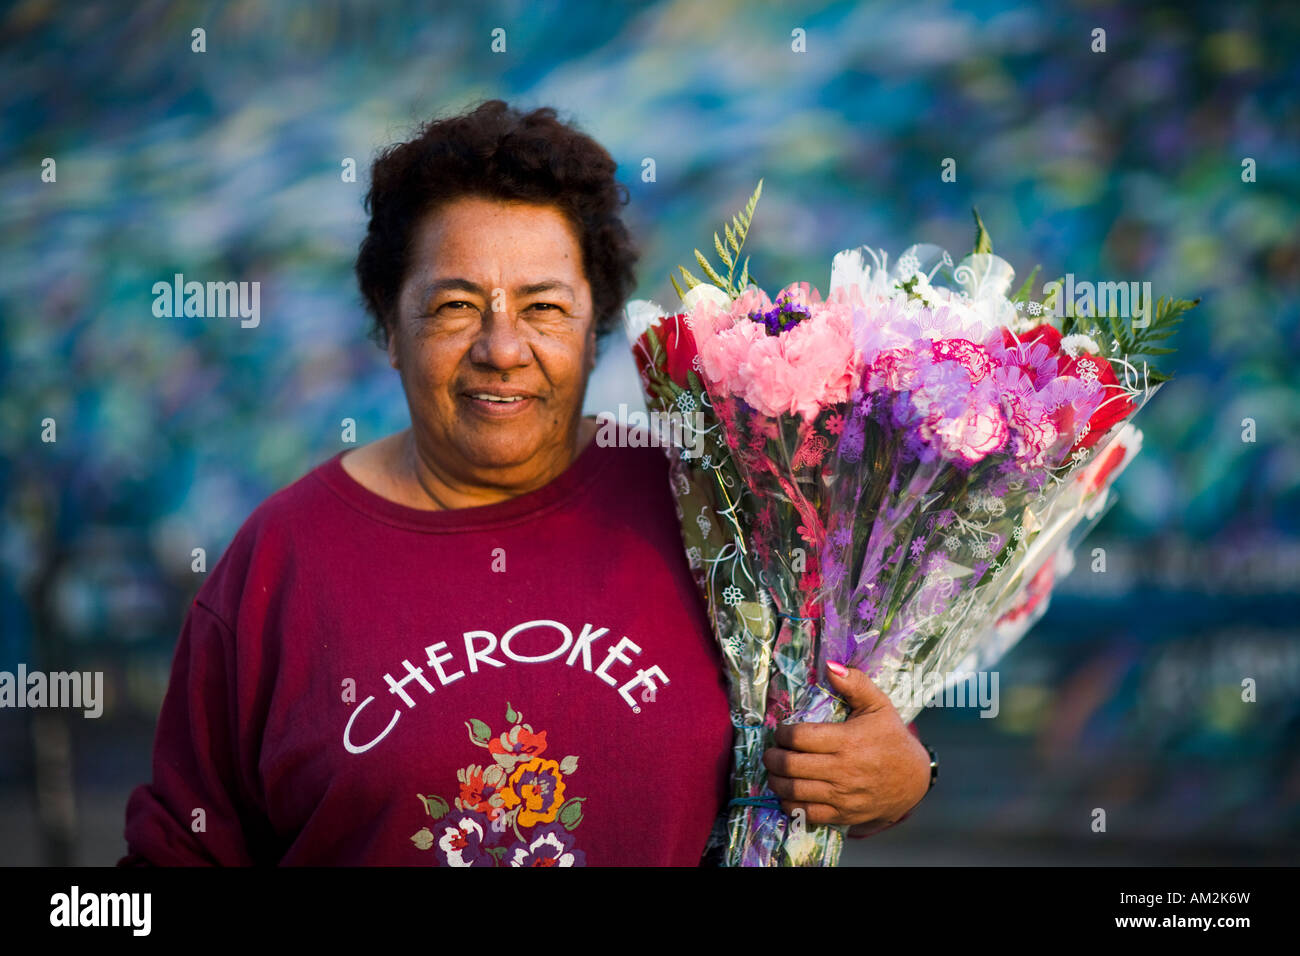 Vendeuse de fleurs Venice Beach Los Angeles County California United States of America Banque D'Images